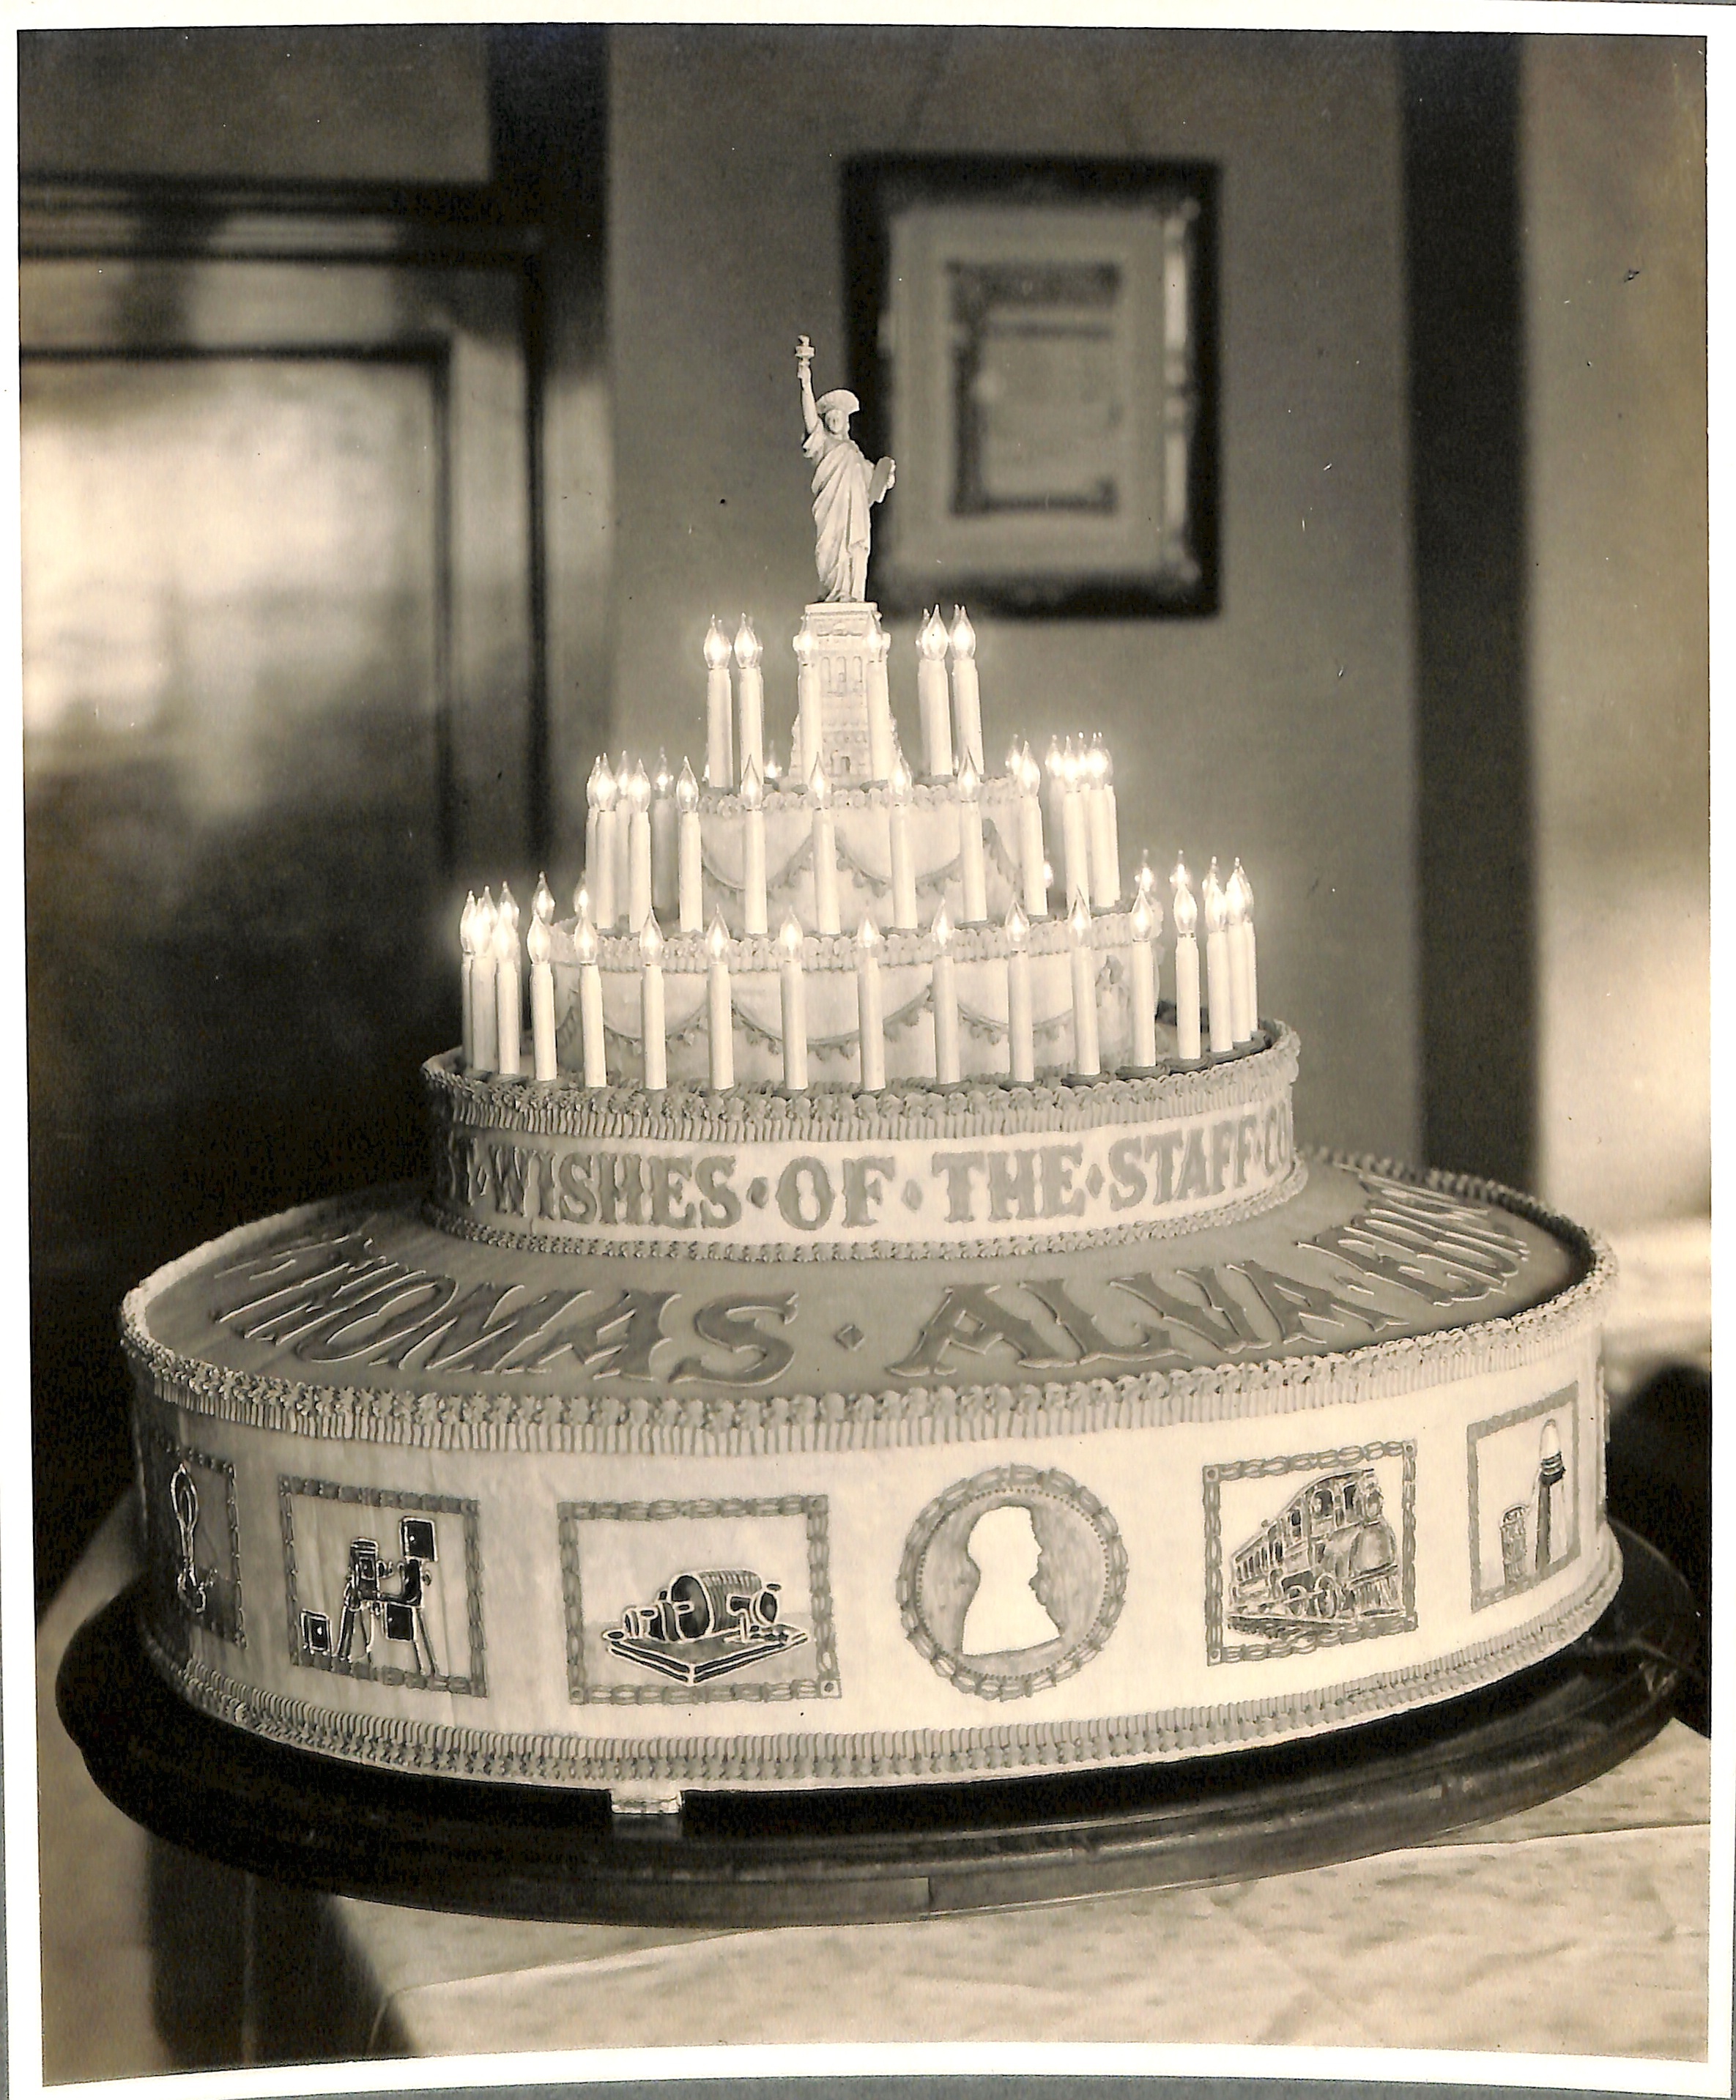 Edison birthday cake presented to Thomas Edison by staff council of Edison Co. on his seventieth birthday.